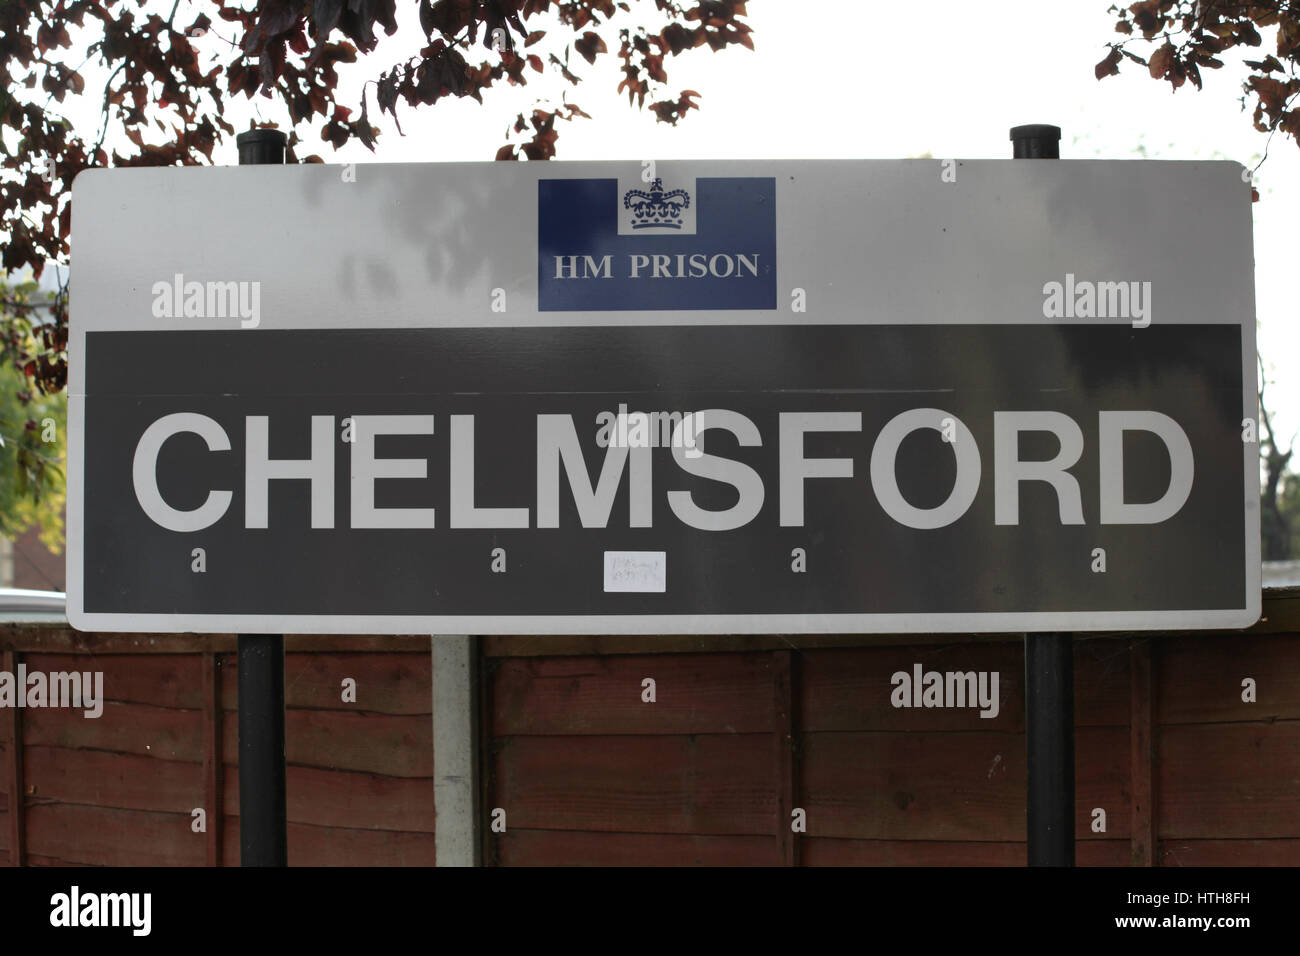 Chelmsford Prison sign, Chelmsford, Essex Stock Photo